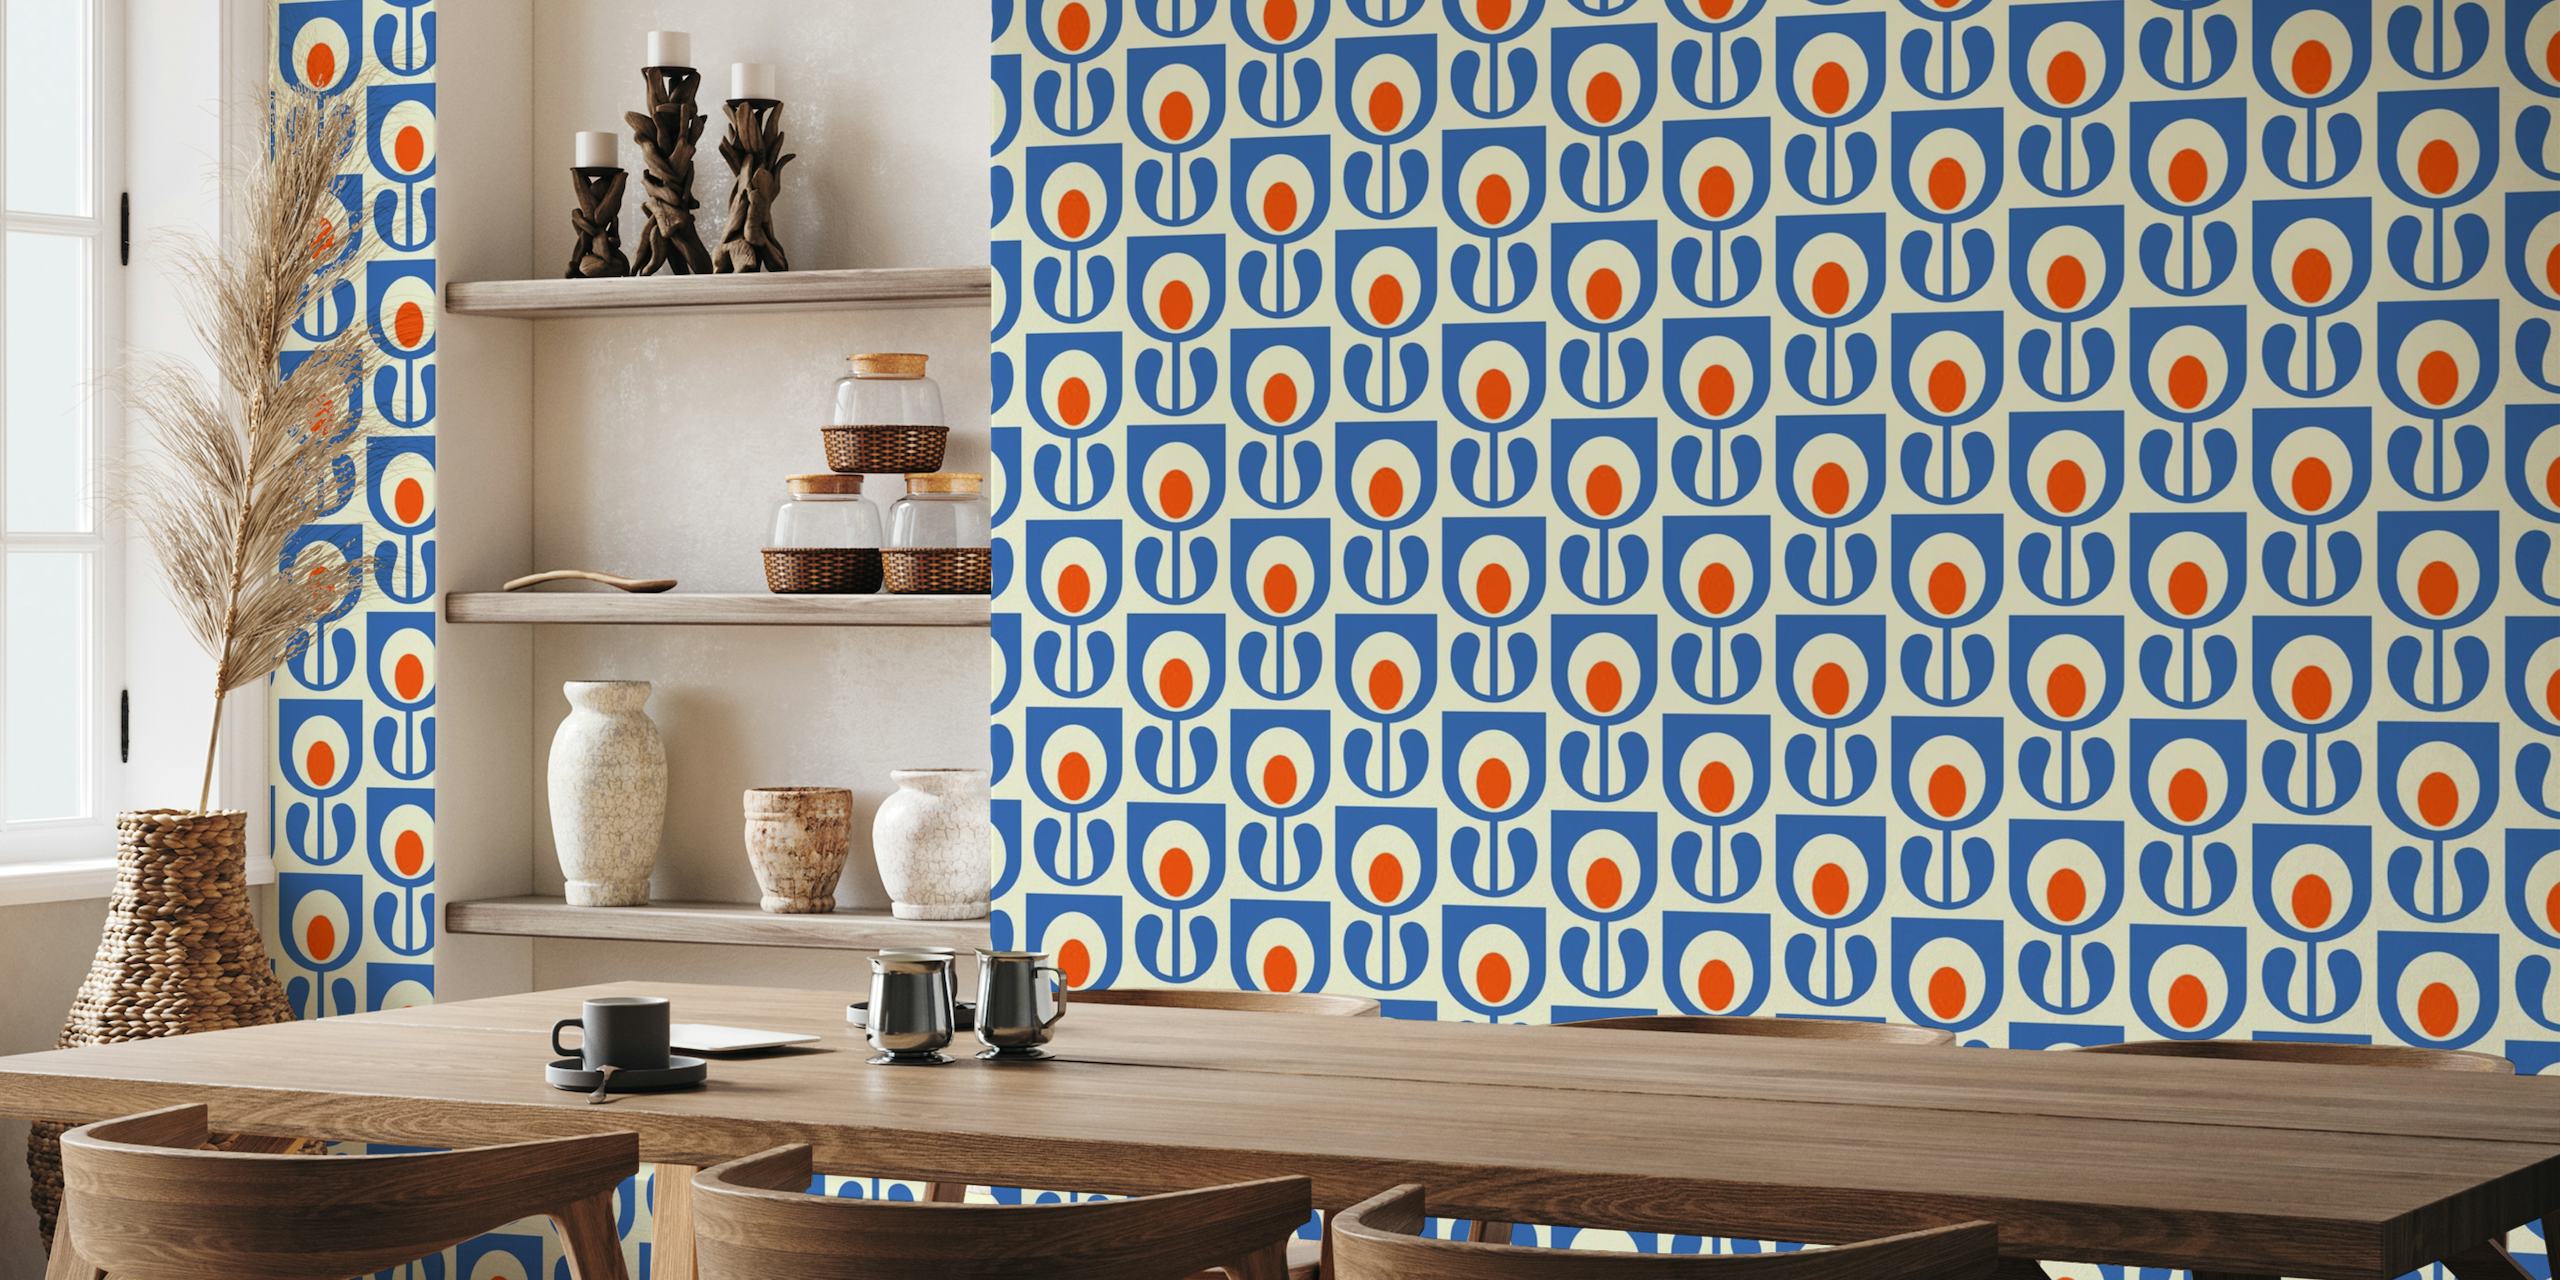 2523 A - retro tulips pattern, blue tapete